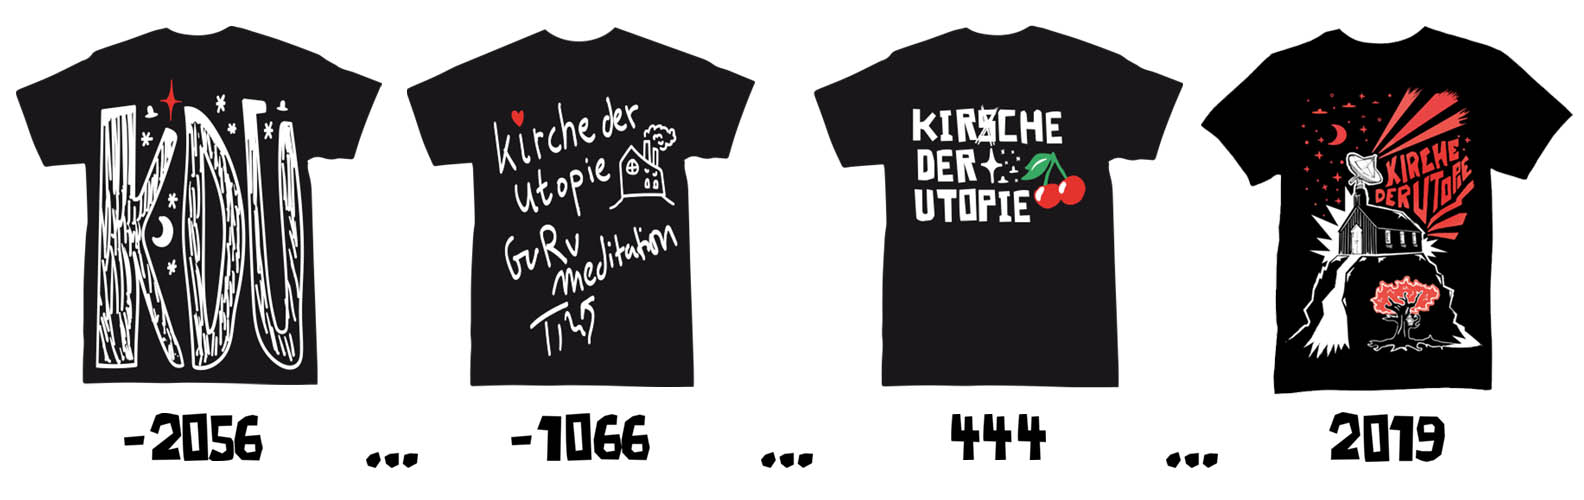 shirt-history-kirche